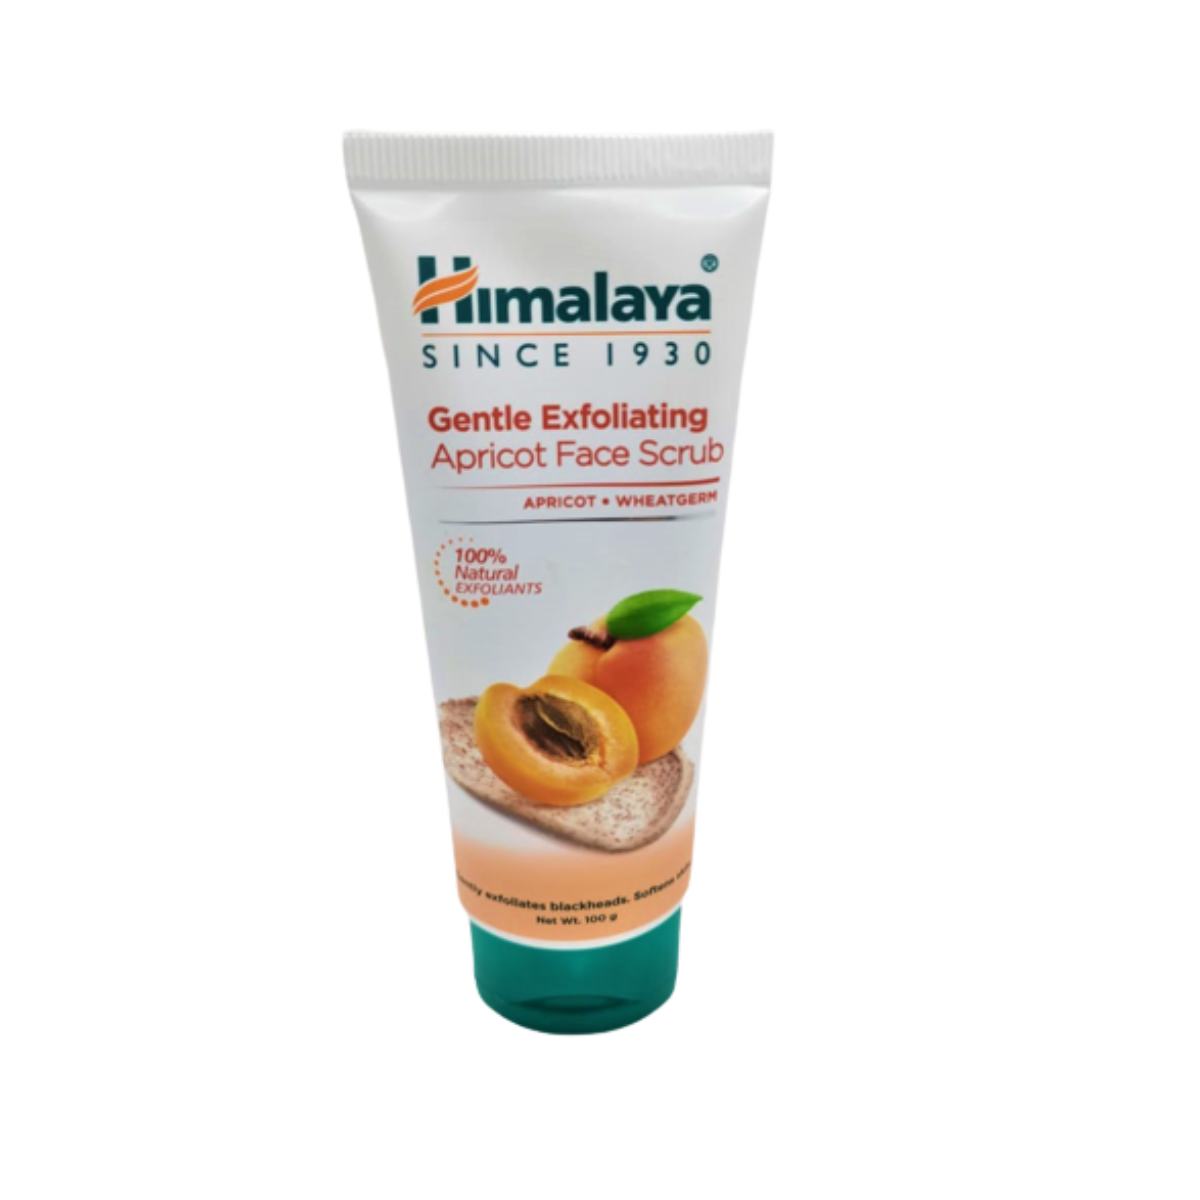 Himalaya Gentle Exfoliating Apricot Face Scrub - 100% Natural Exfoliants - 100g